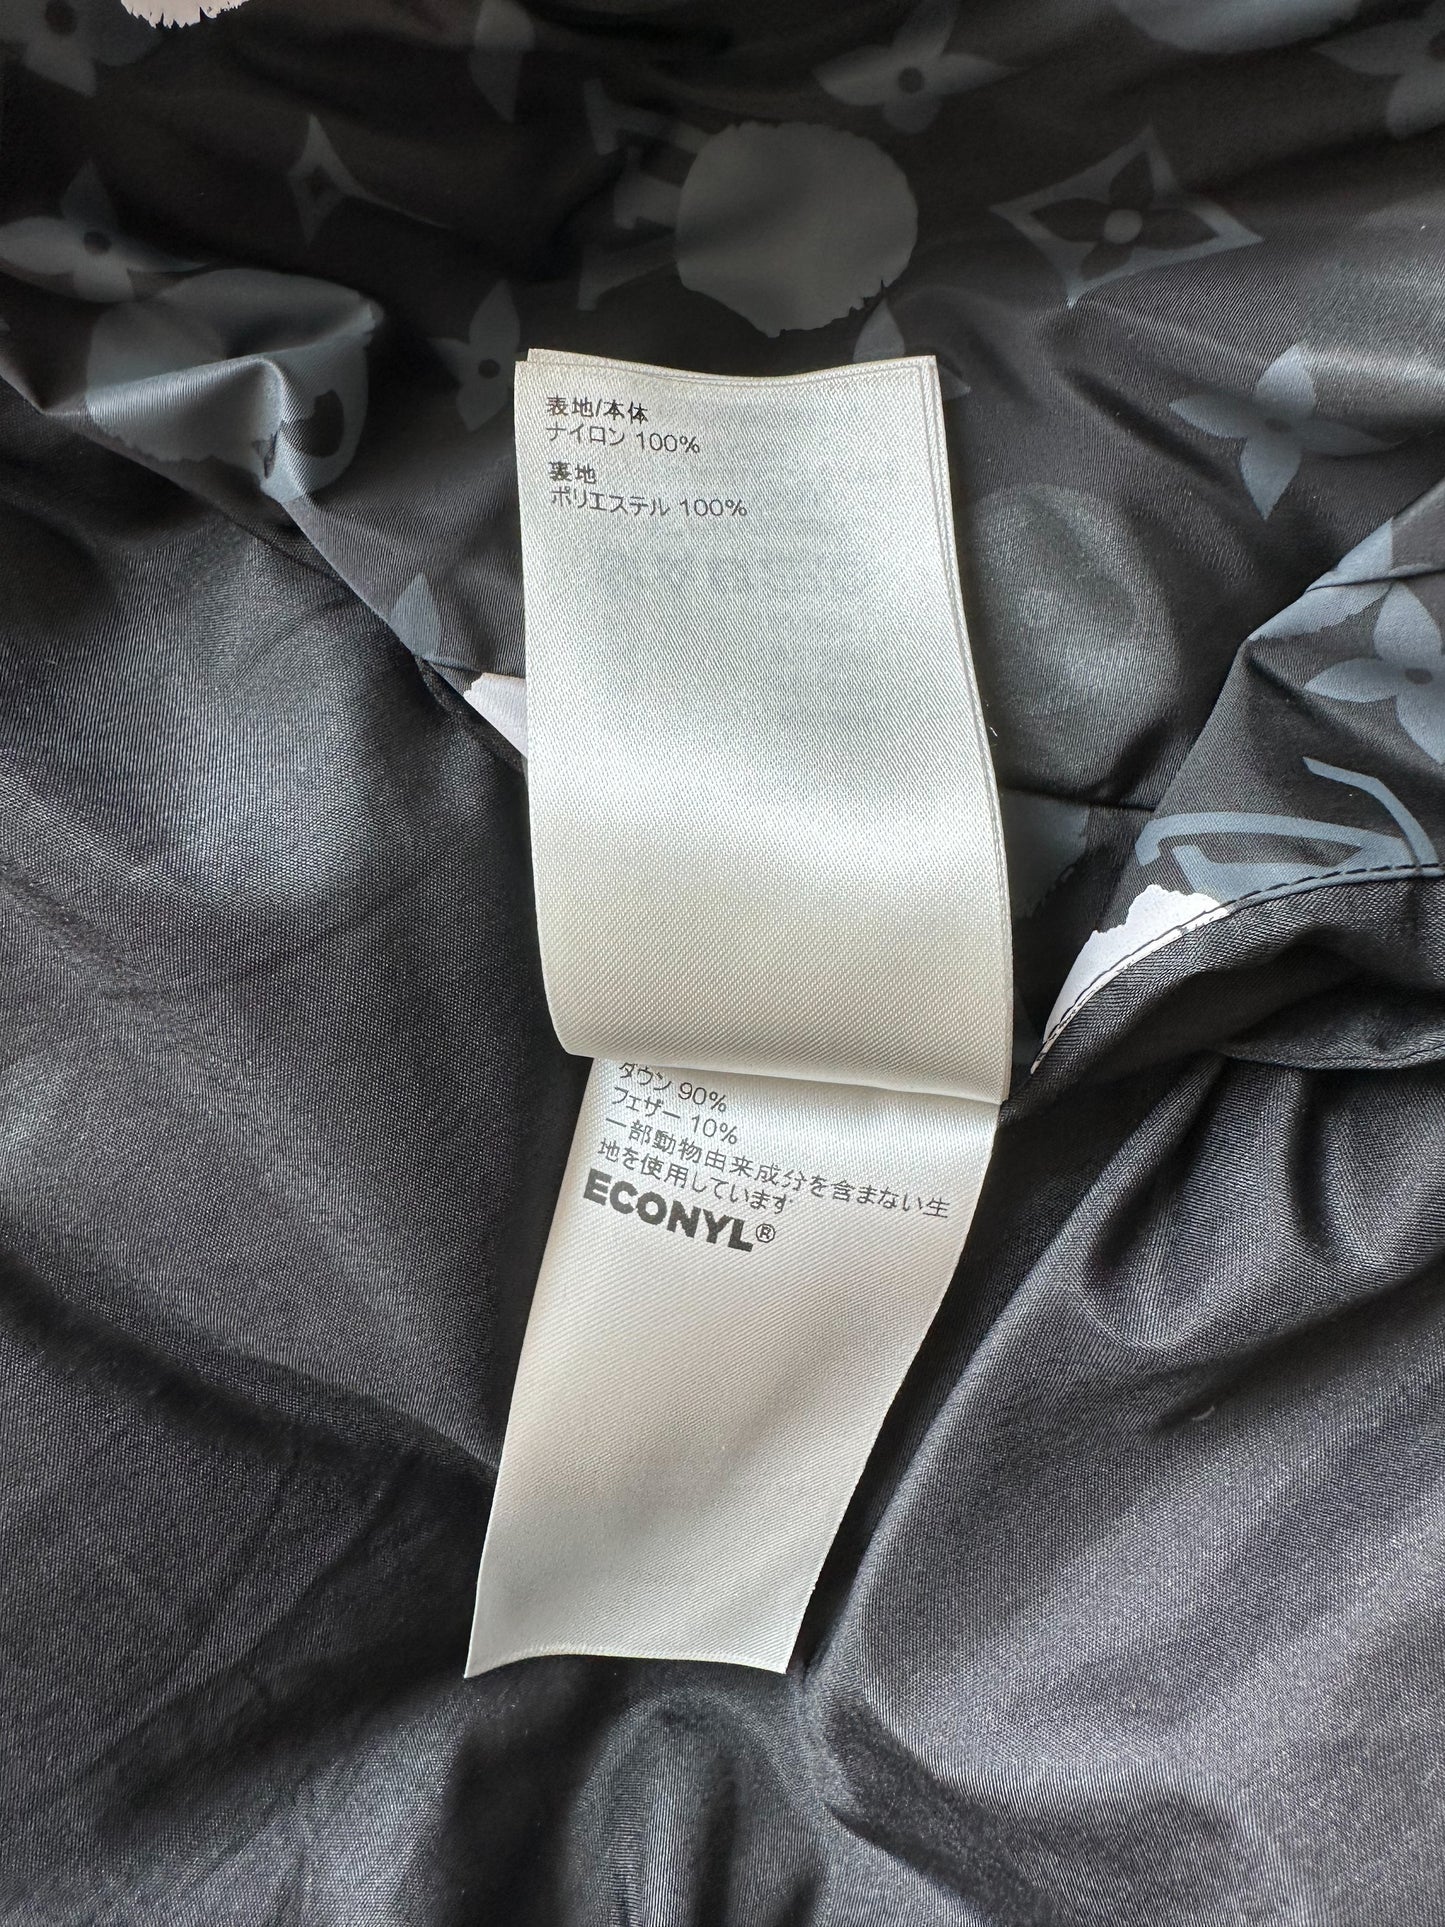 Louis Vuitton Yayoi Kusama Polka Dot Monogram Puffer Jacket